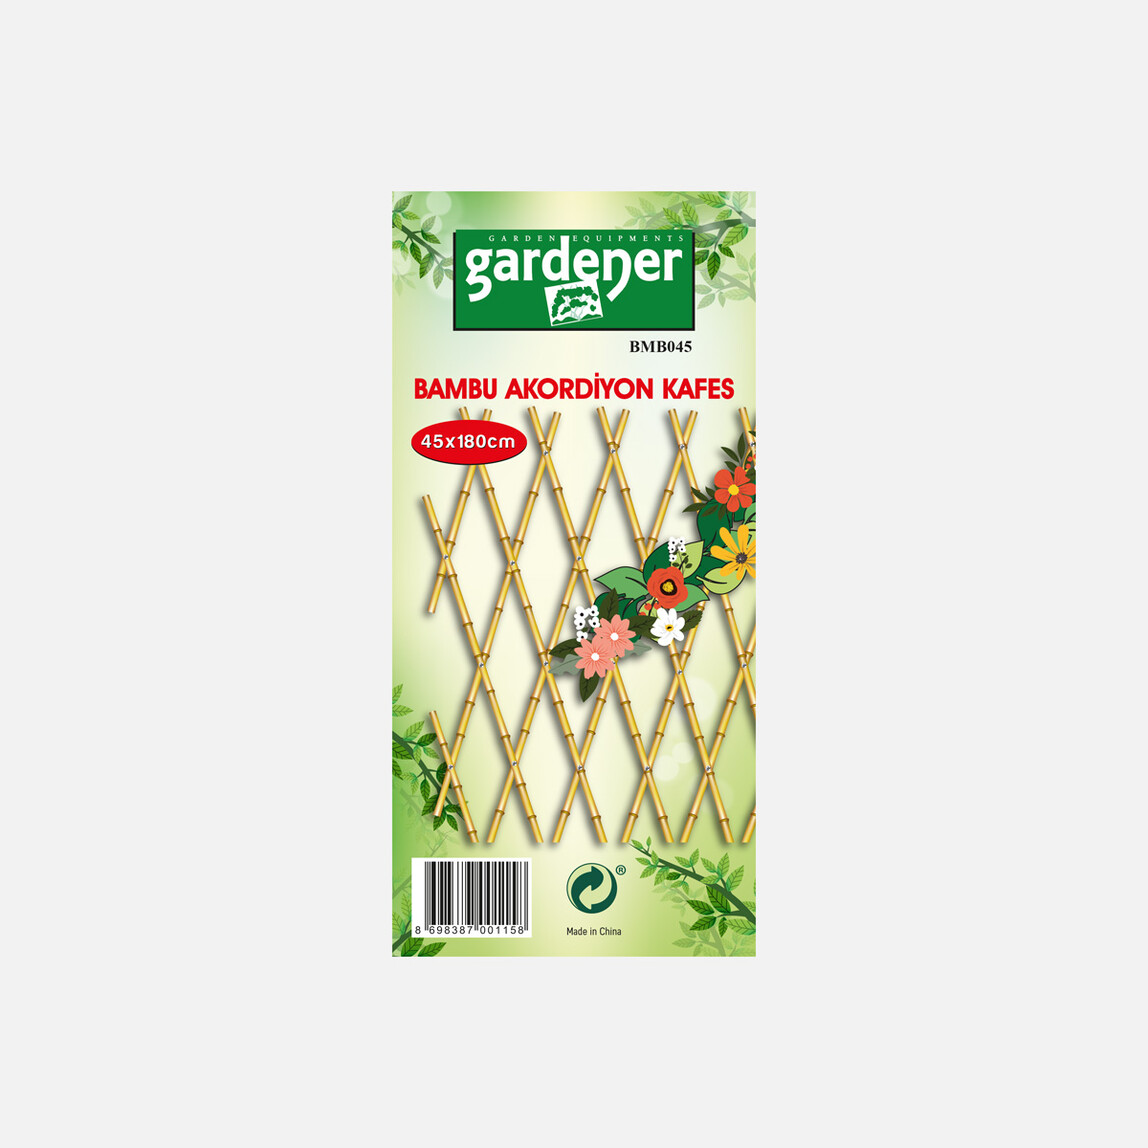    Gardener Bambu Akordiyon Kafes 45x180cm 